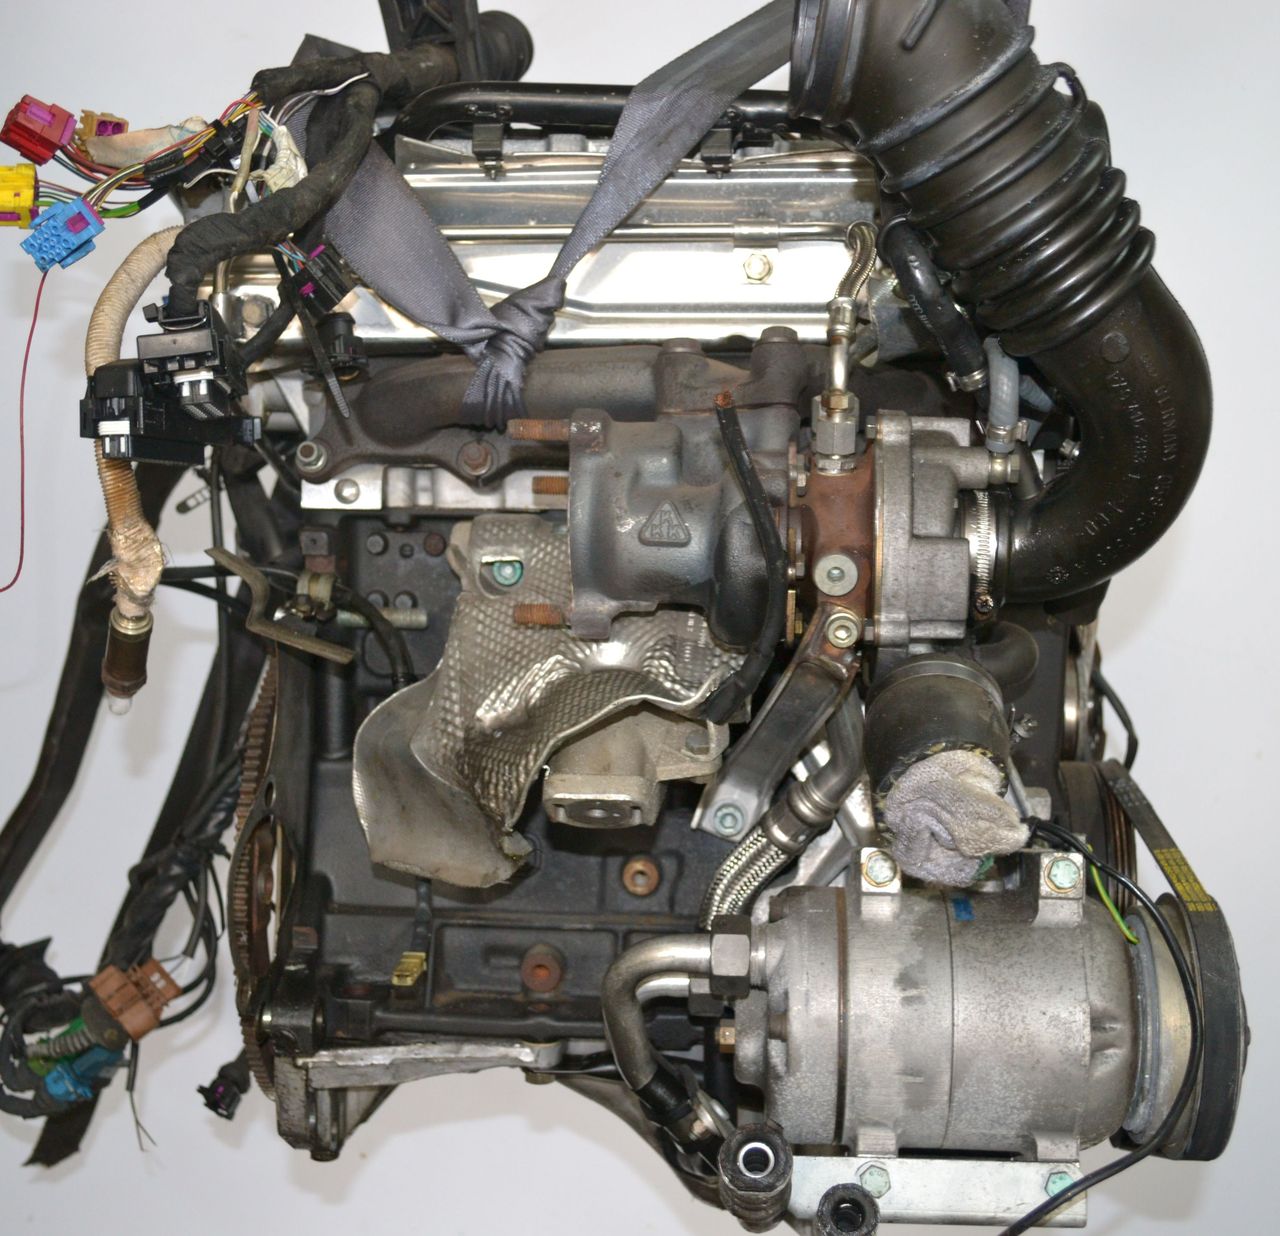 Пассат aeb. Мотор ANB 1.8 турбо. Двигатель АЕБ 1.8 турбо. Двигатель AEB 1.8 турбо. Двигатель AEB 1.8T.